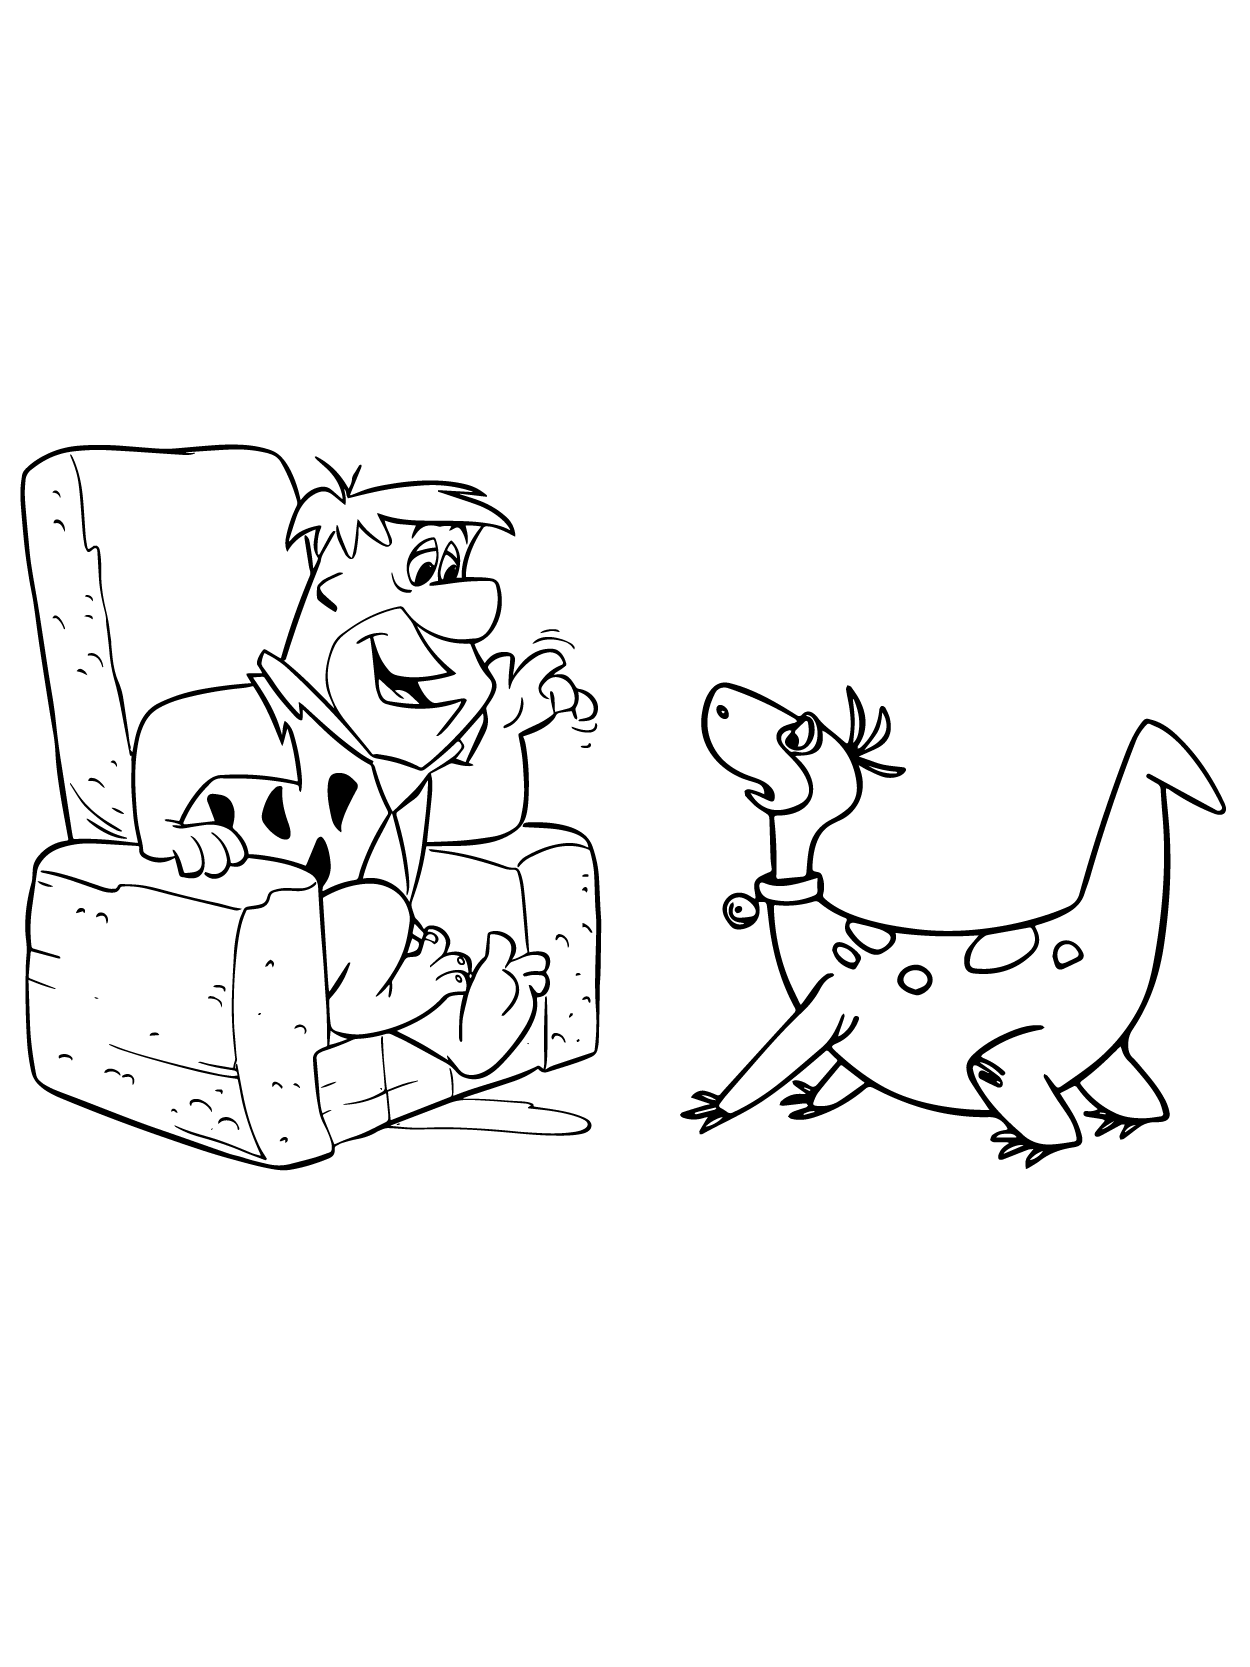 Fred et Dino en Conversation